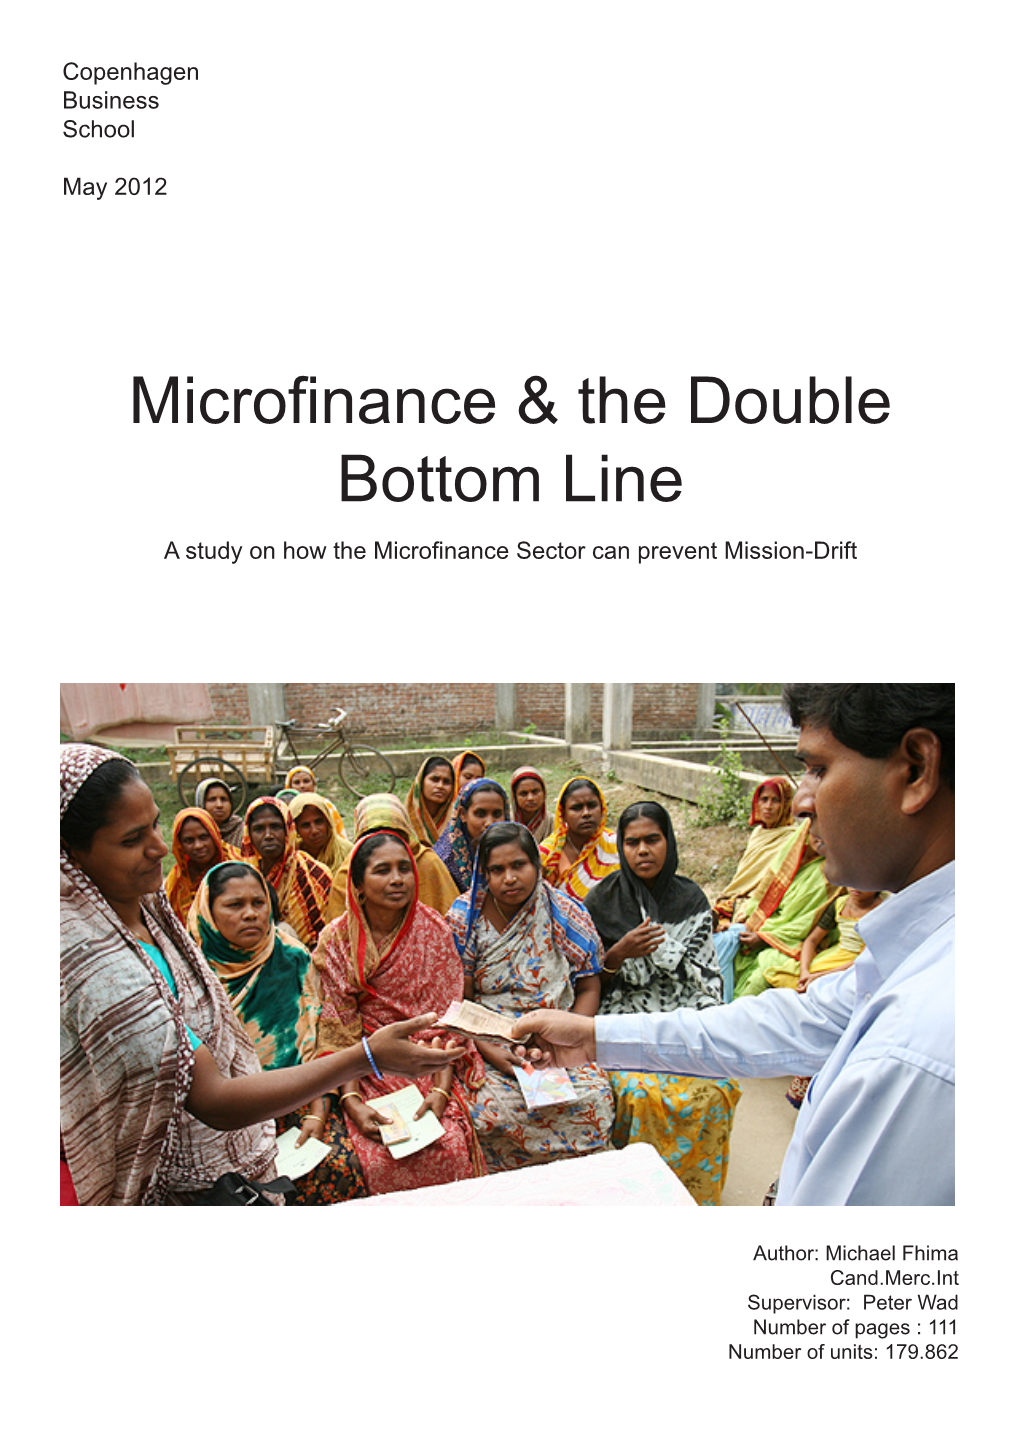 Microfinance & the Double Bottom Line